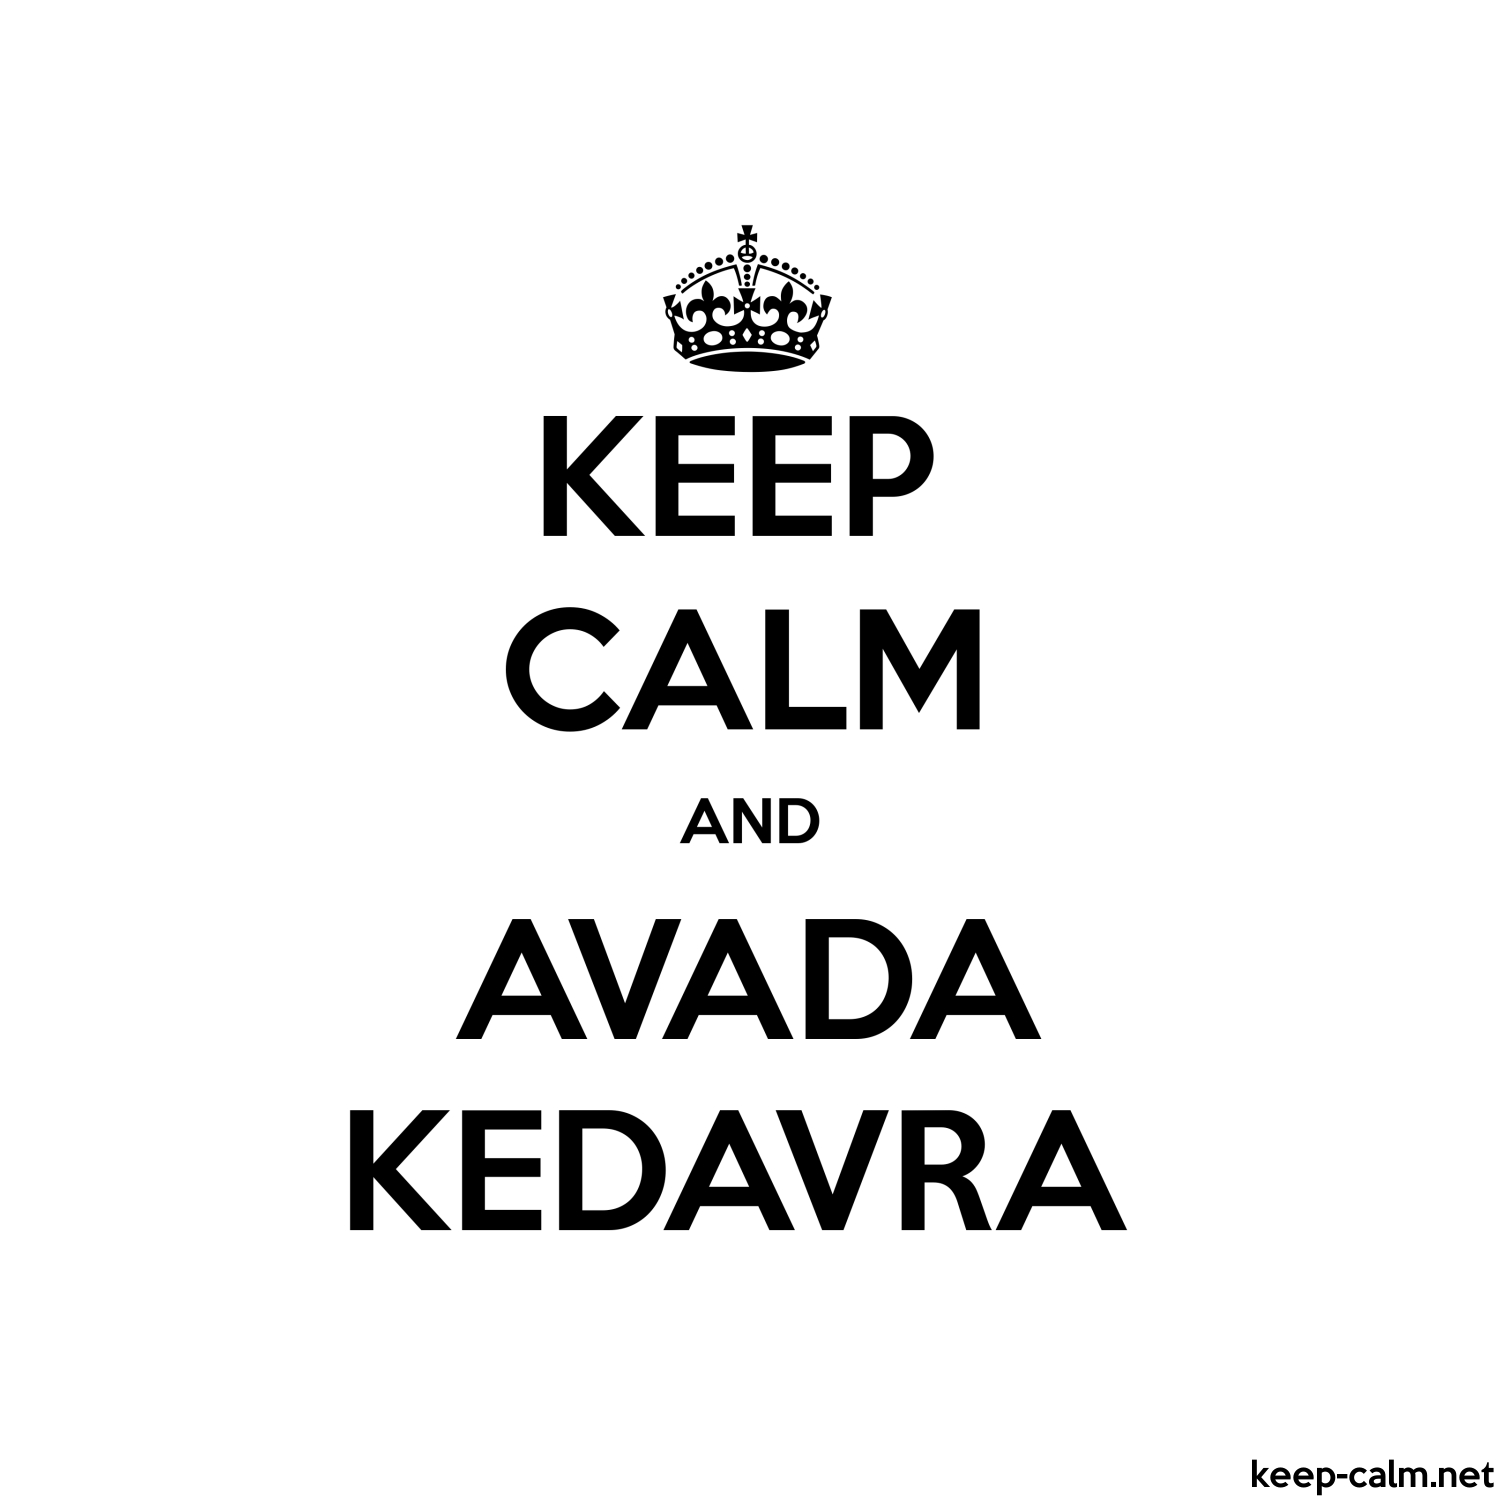 KEEP CALM AND AVADA KEDAVRA